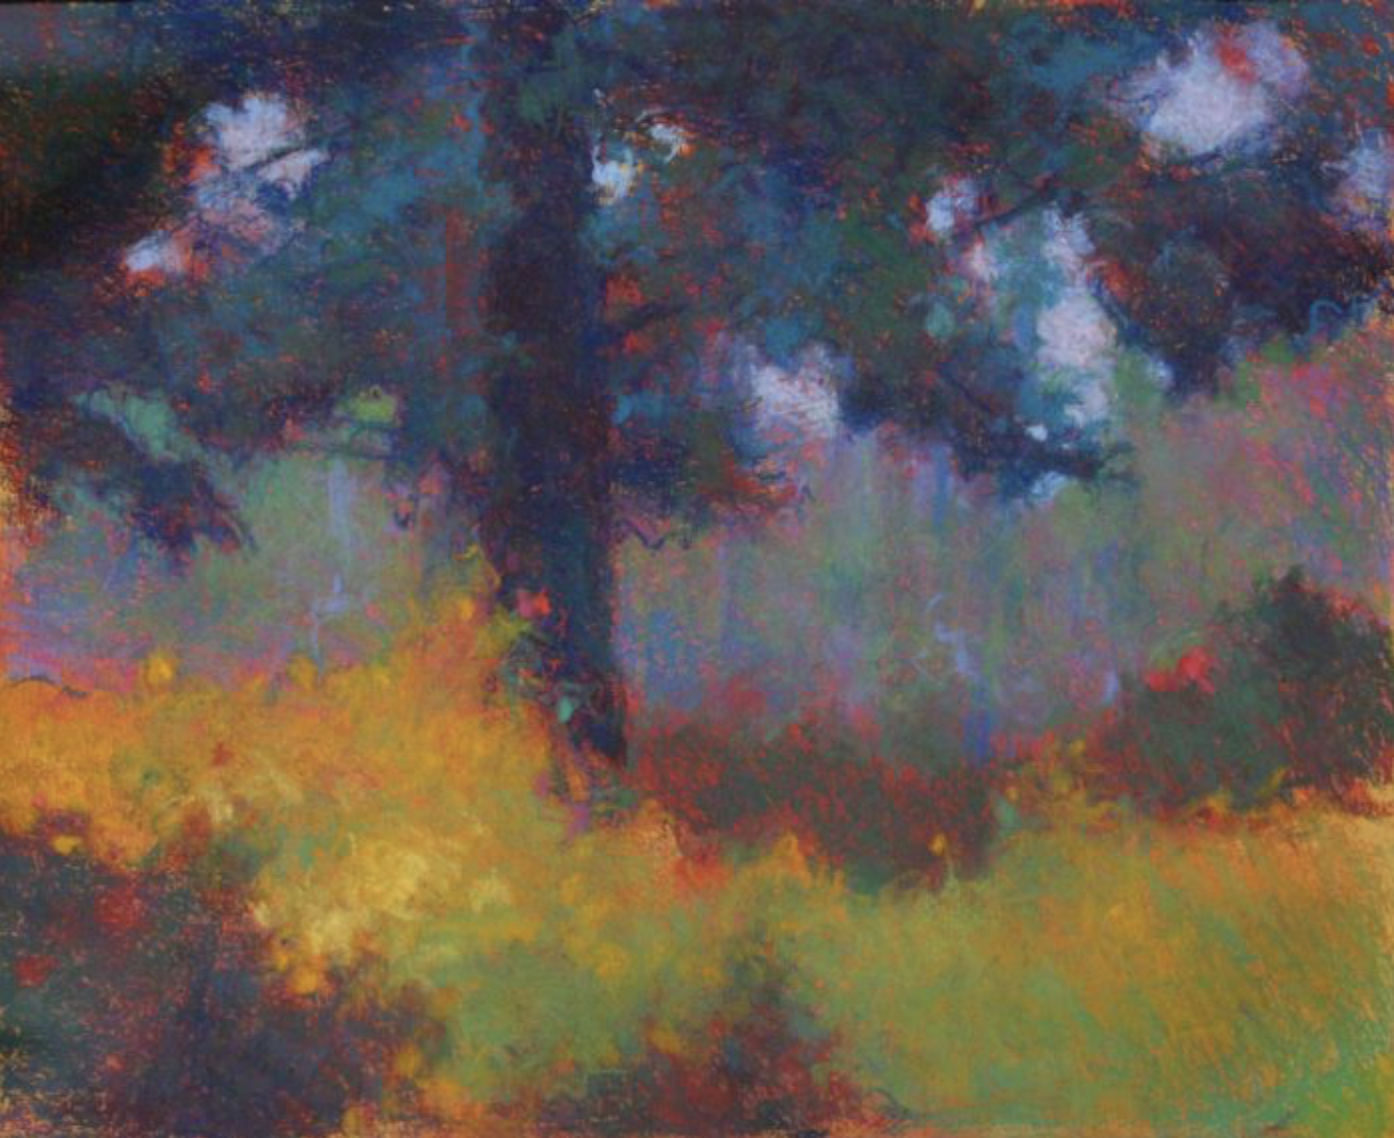 Doug Dawson, "Mountain Pine," pastel, 15 1/2 x 19 in. This was in the 2022 IAPS exhibition.